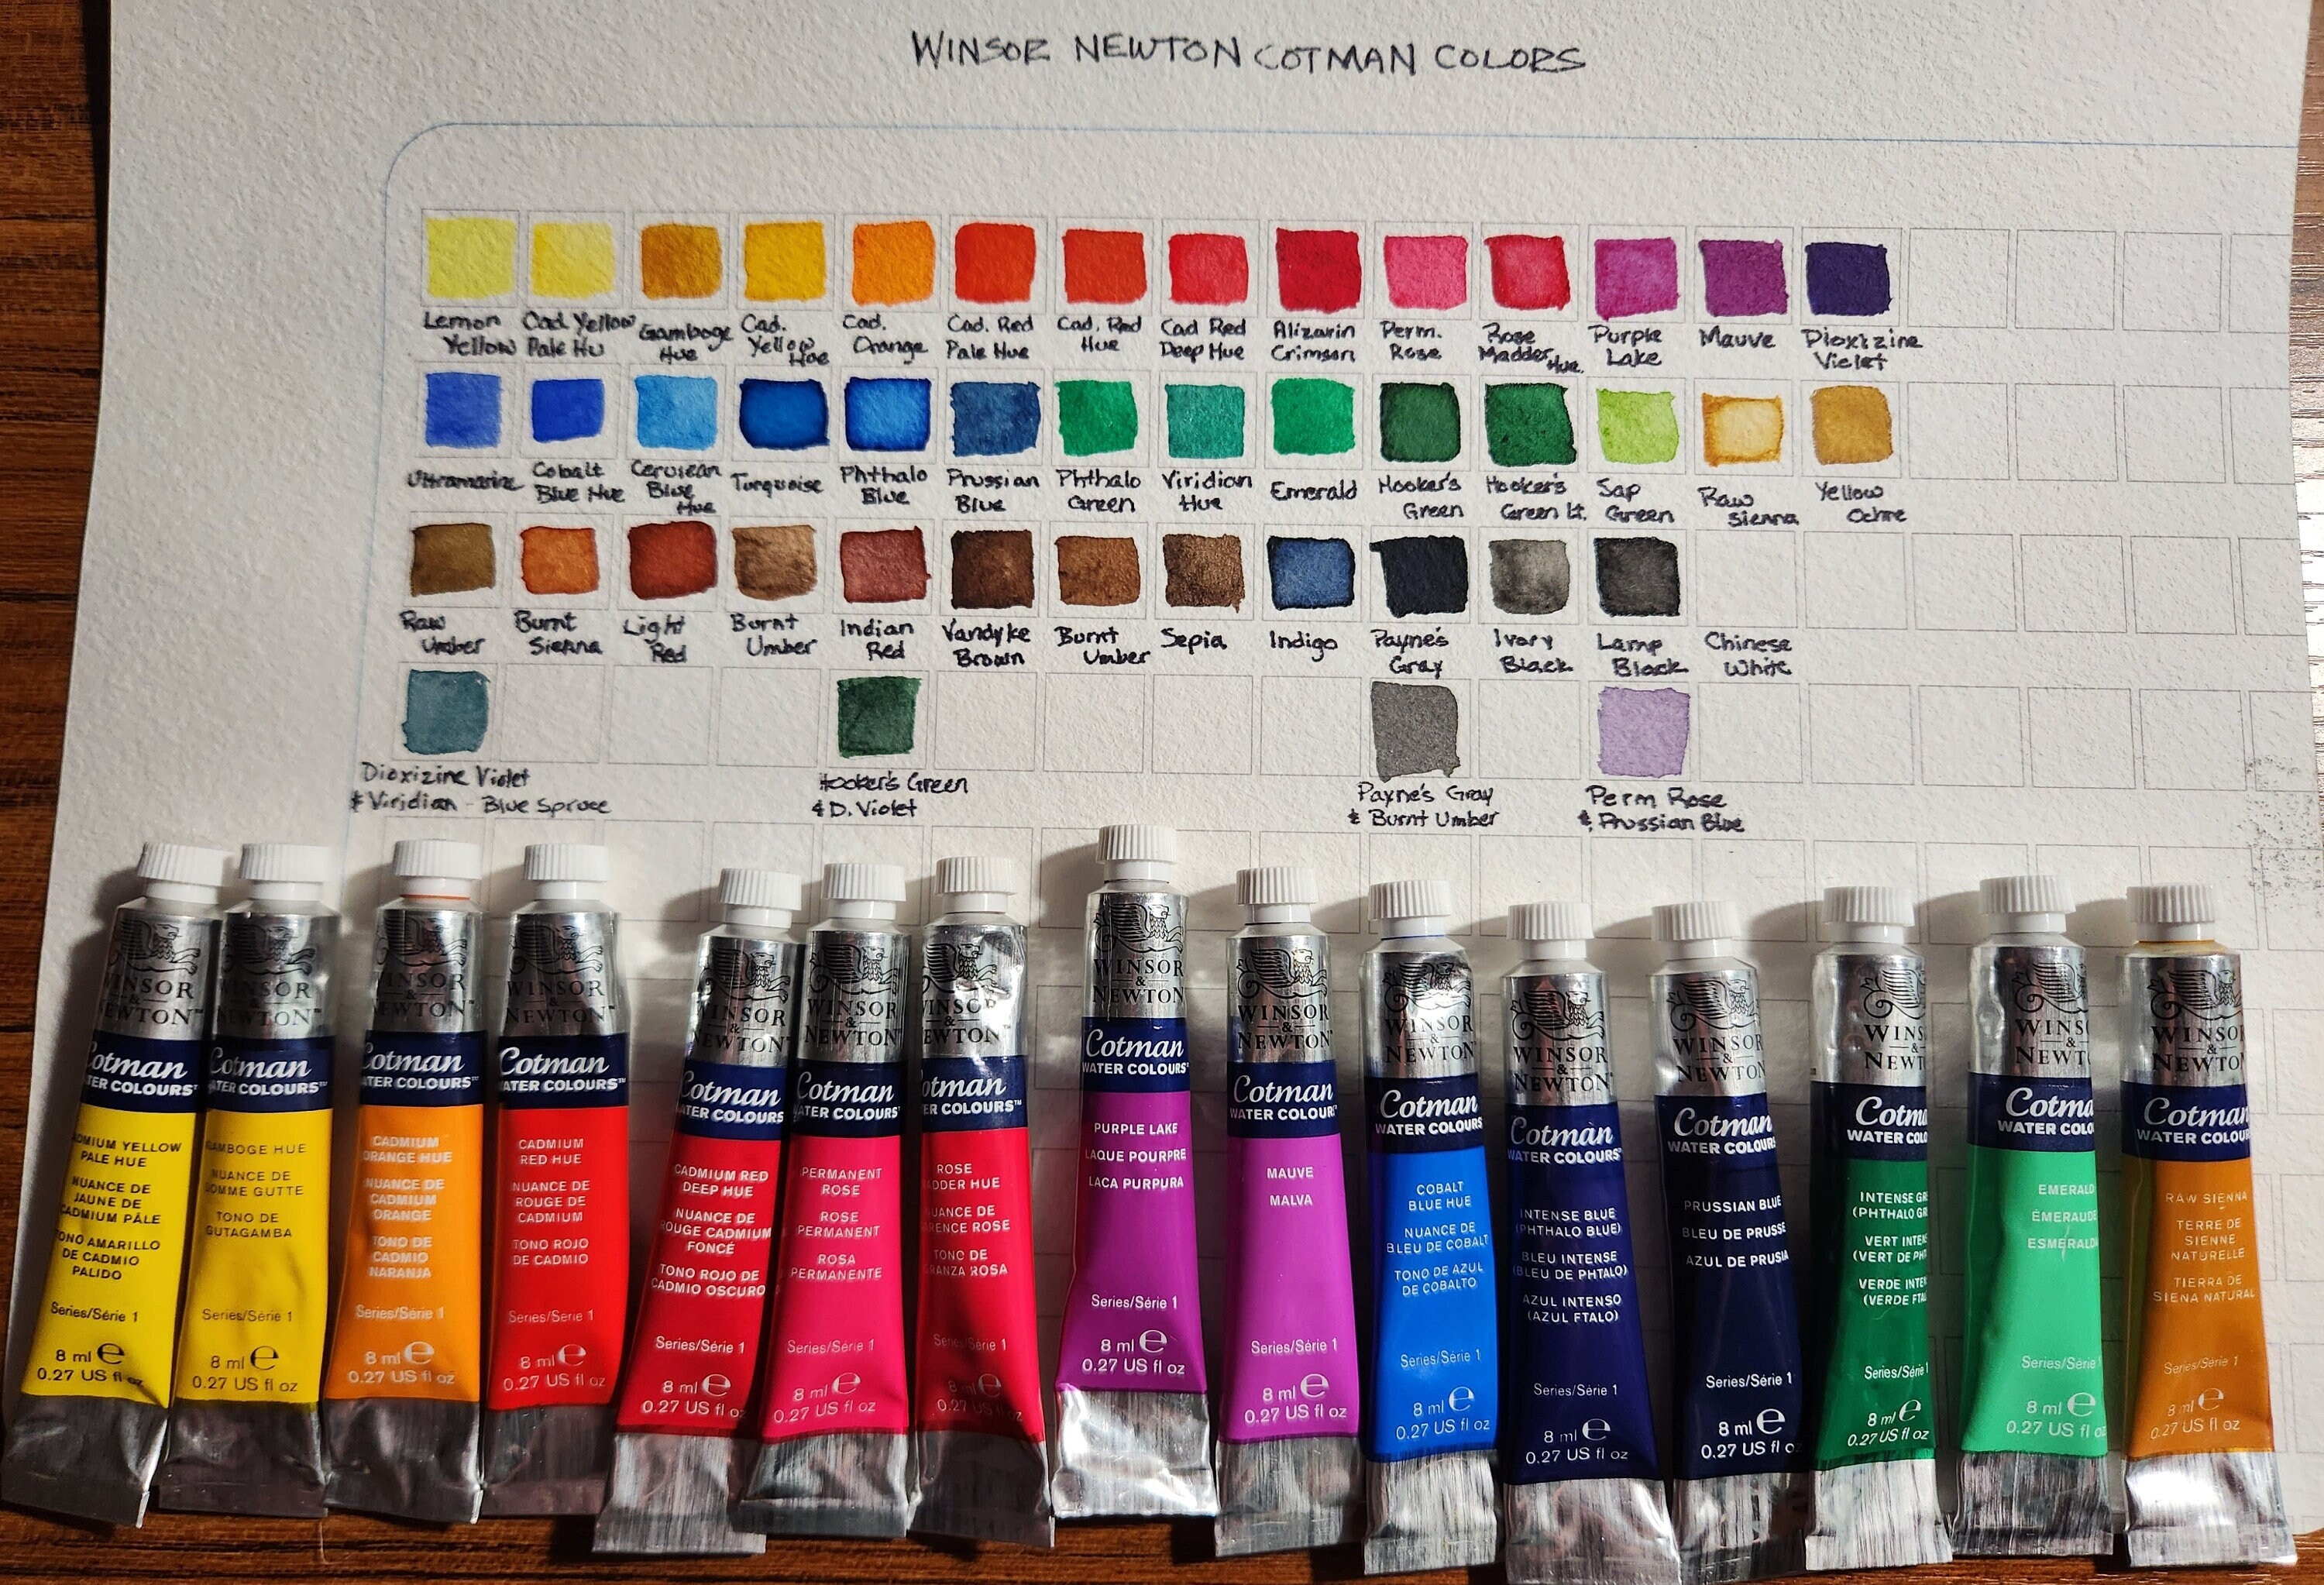 Daniel Smith Luminescent Watercolor Paint Set 48 Colors Full Set